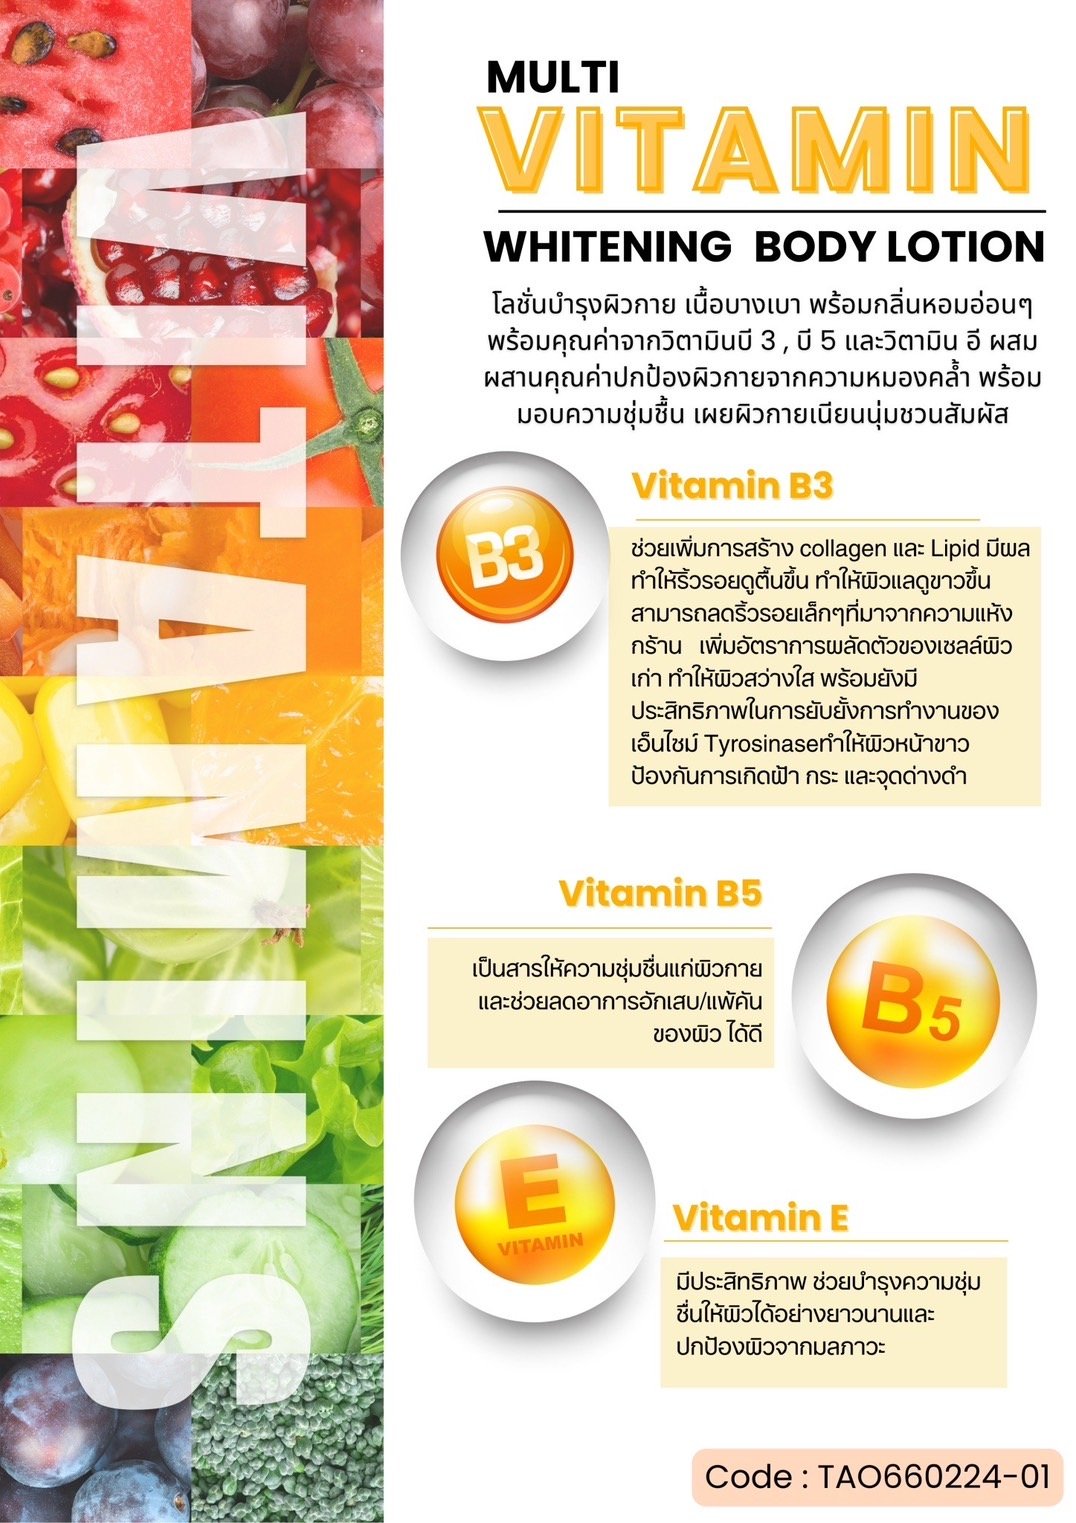 Multi vitamin Whitening Body Lotion